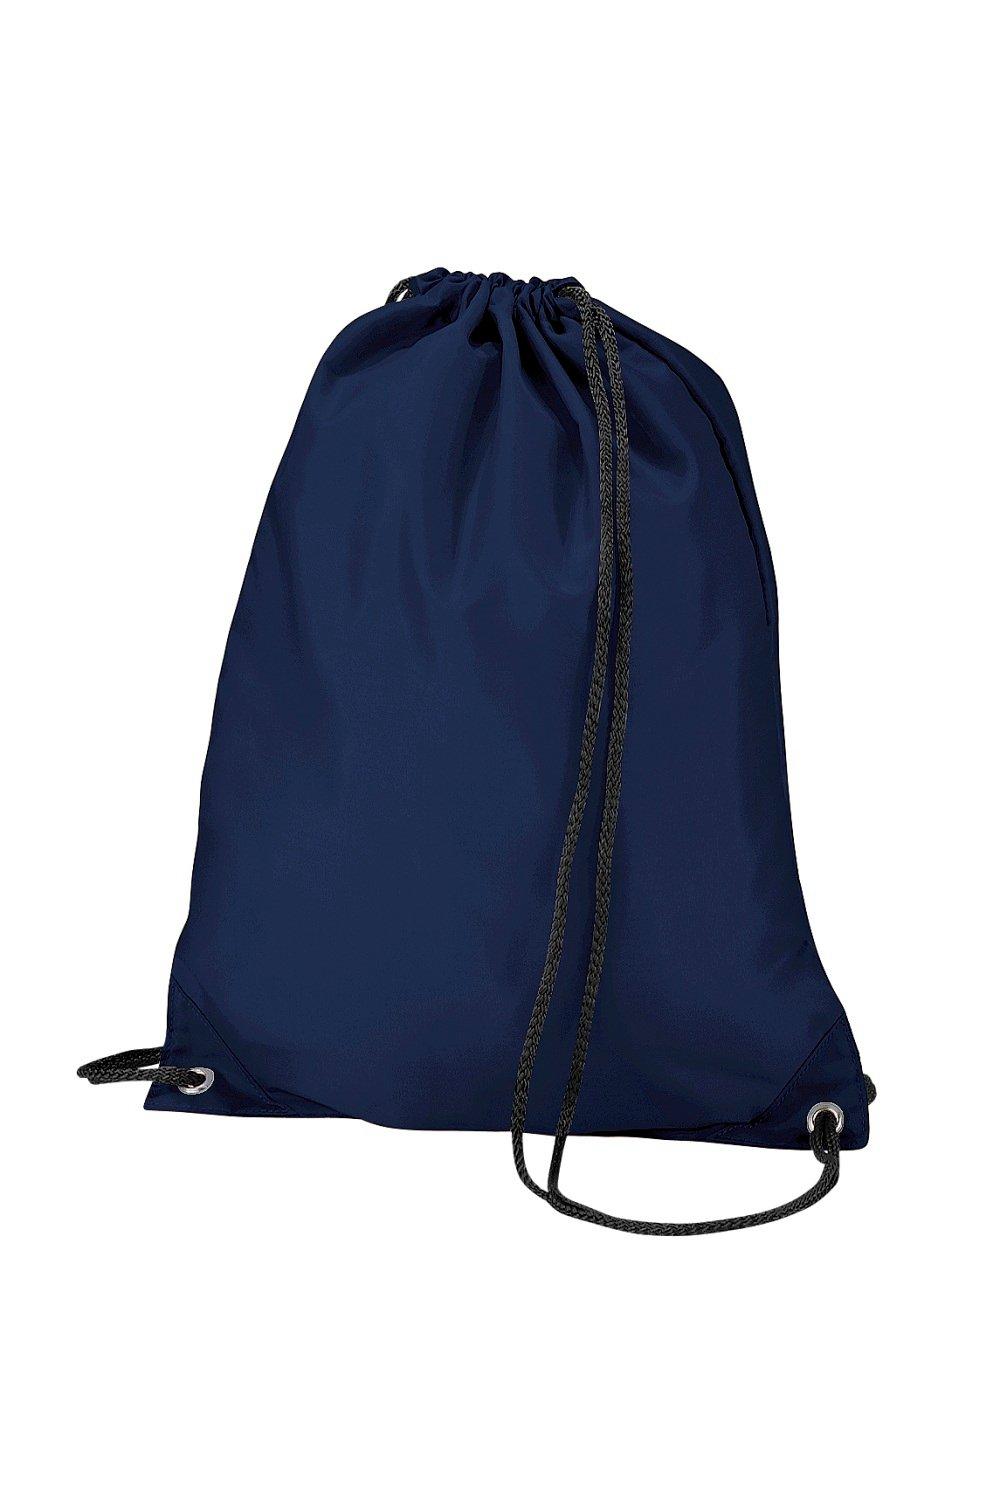 Бюджетная водостойкая спортивная сумка Gymsac на шнурке (11 л) Bagbase, темно-синий сумка urban gymsac на шнурке sol s темно синий